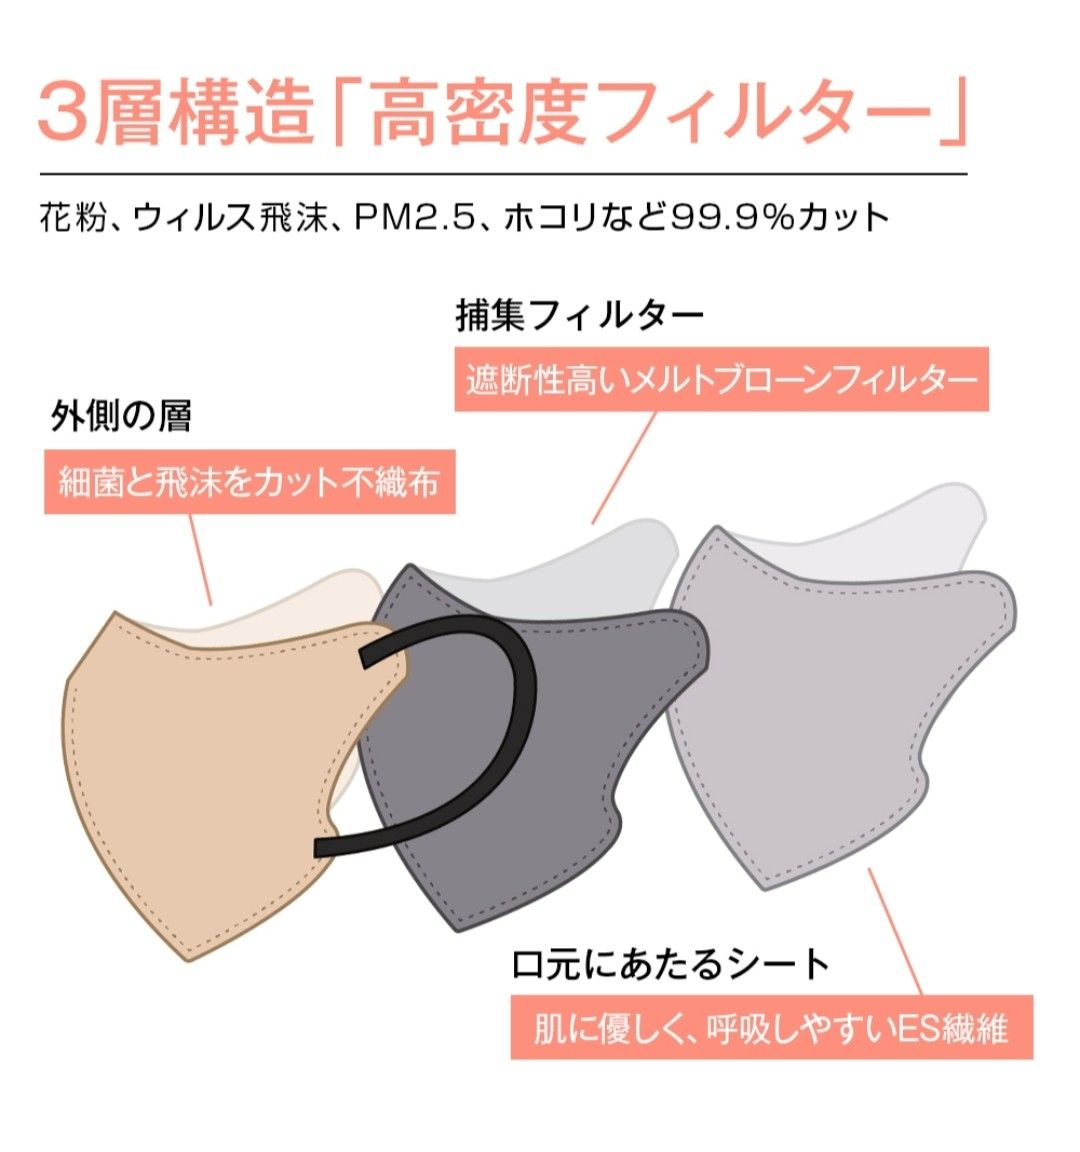 SOUSIA マスク 国産 10枚入り2個 ベージュ 不織布 花粉 日本製 立体マスク